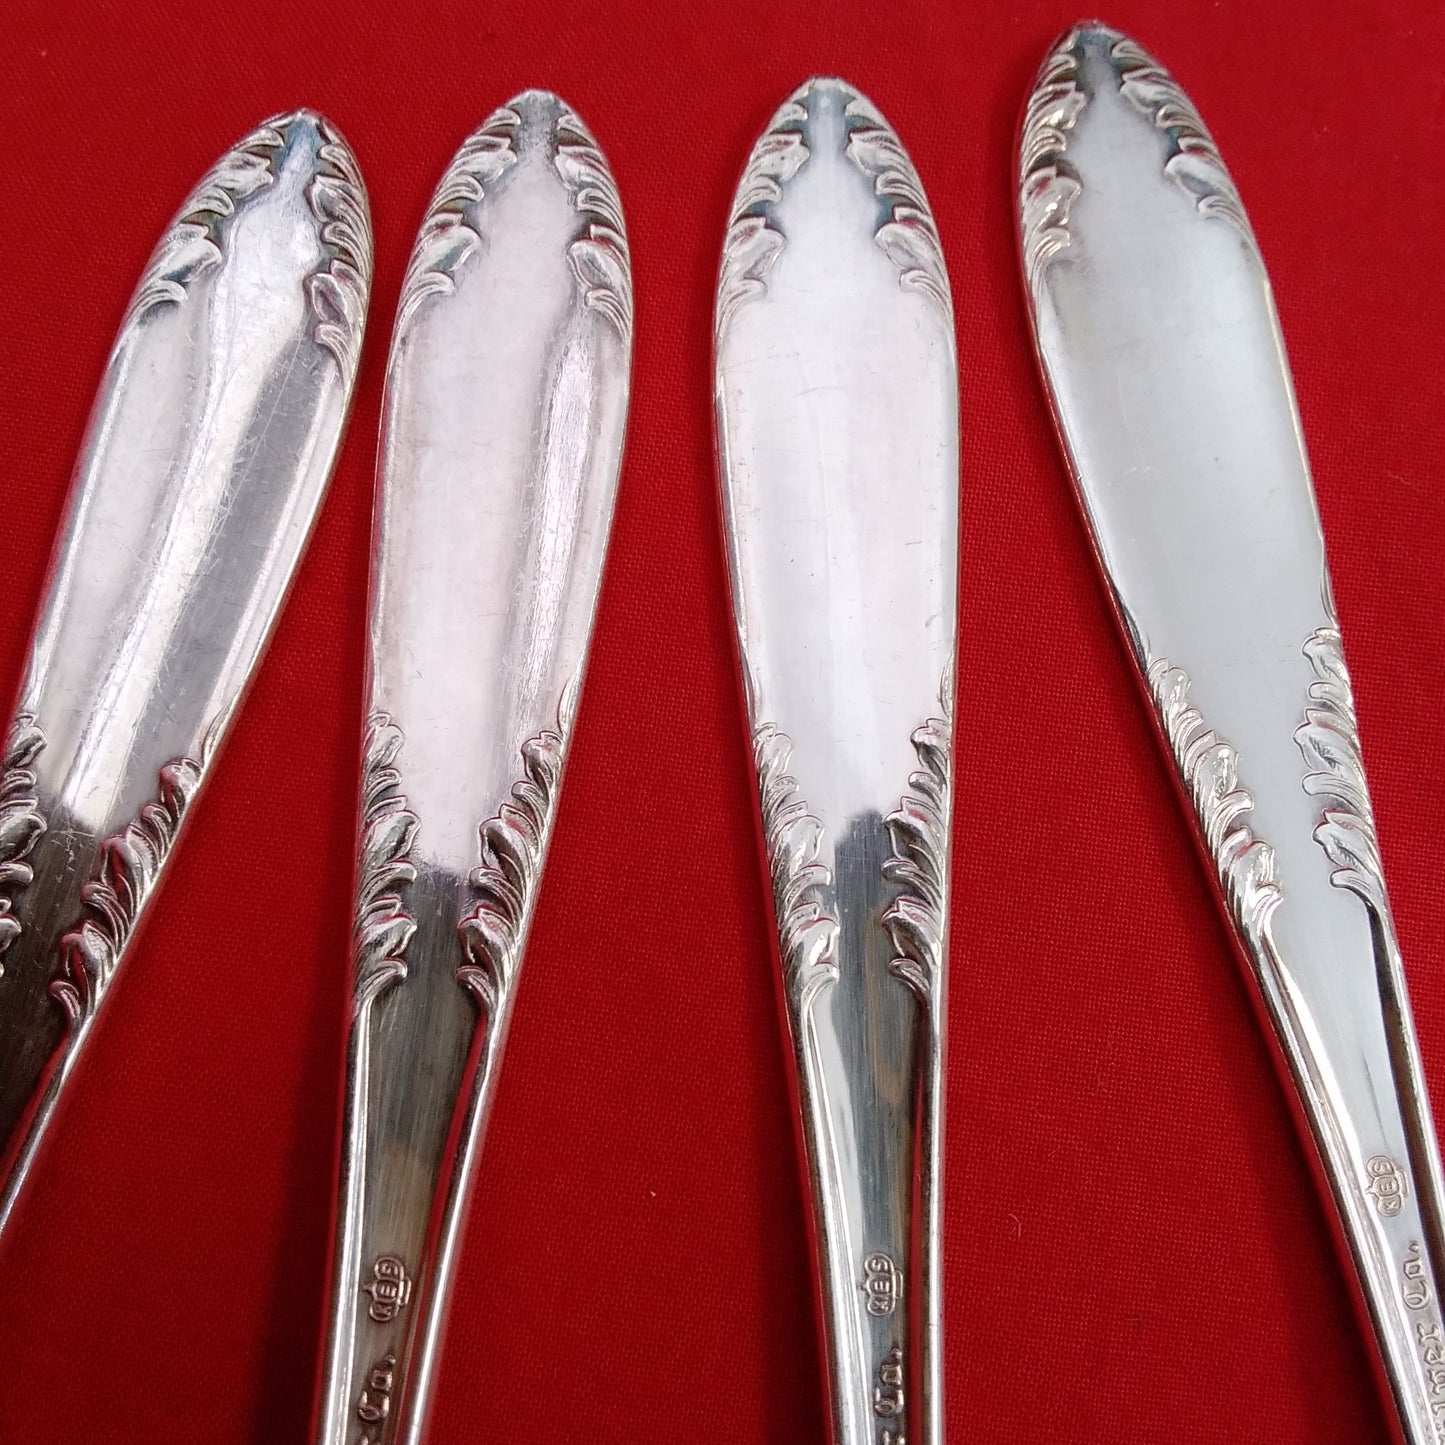 Vintage - Set of 6 National Silver Co. "King Edward Pattern" Tea Spoons